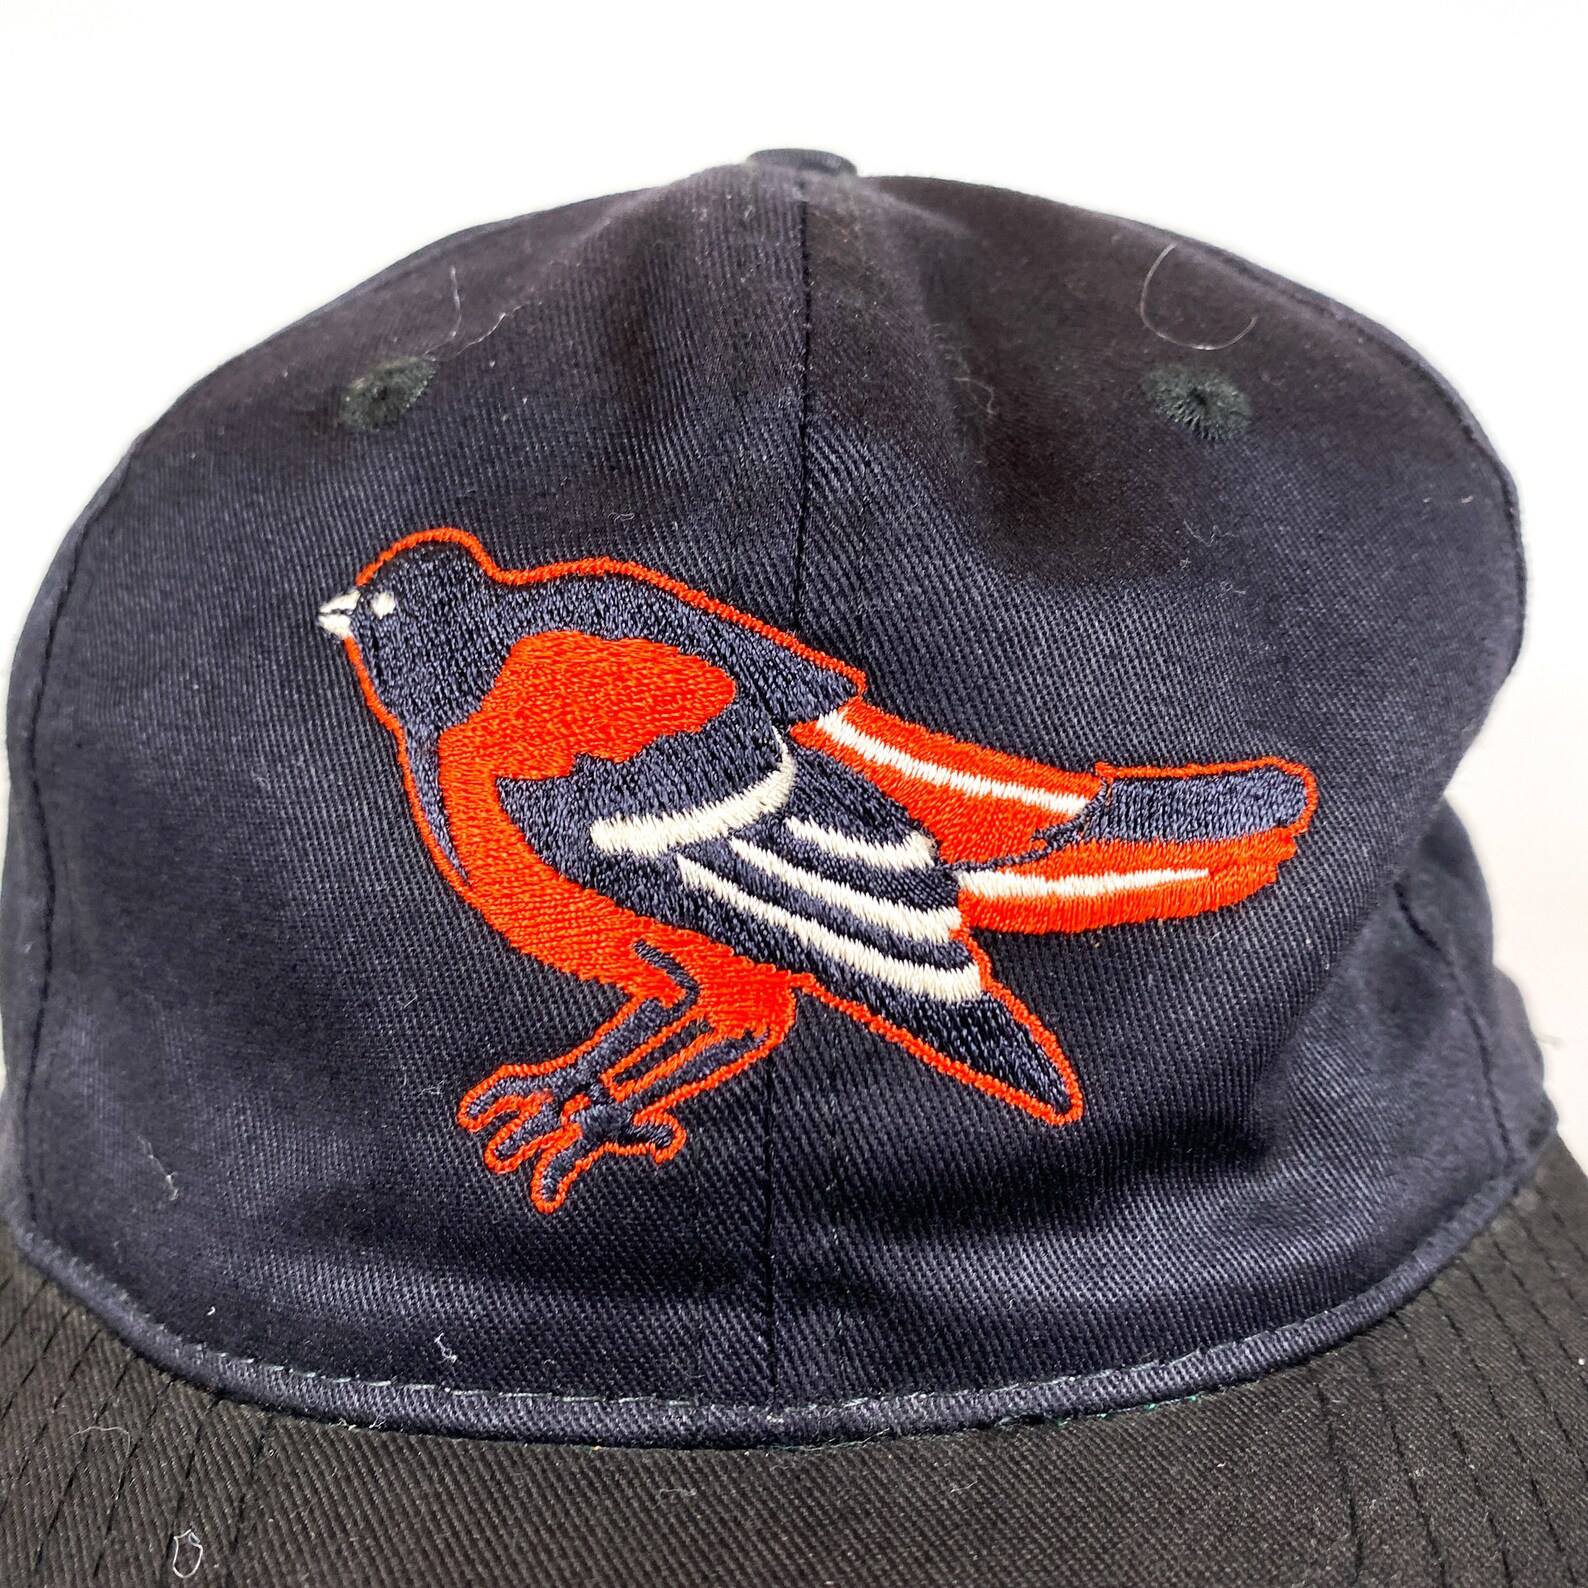 Vintage Baltimore Orioles hat 90s baltimore orioles cap | Etsy